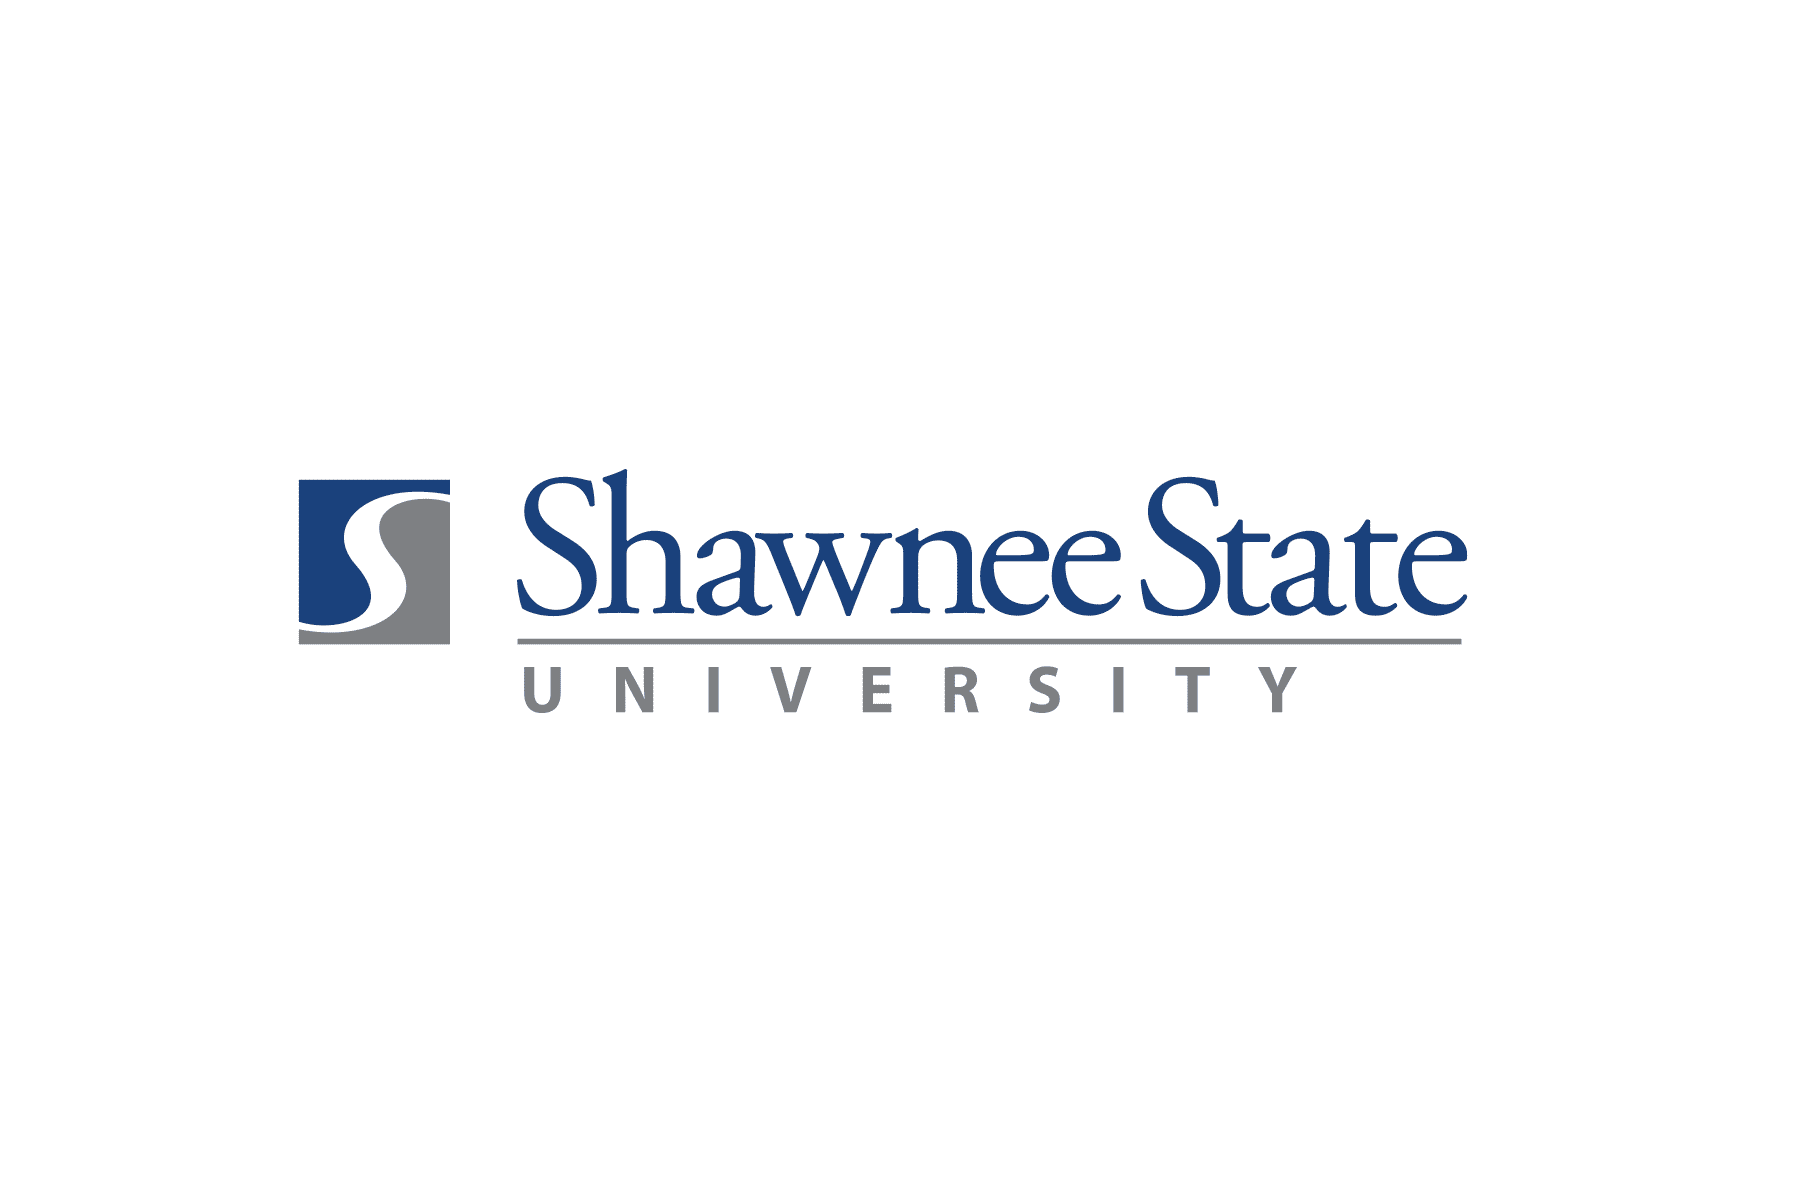 Shawnee State University representative imagery